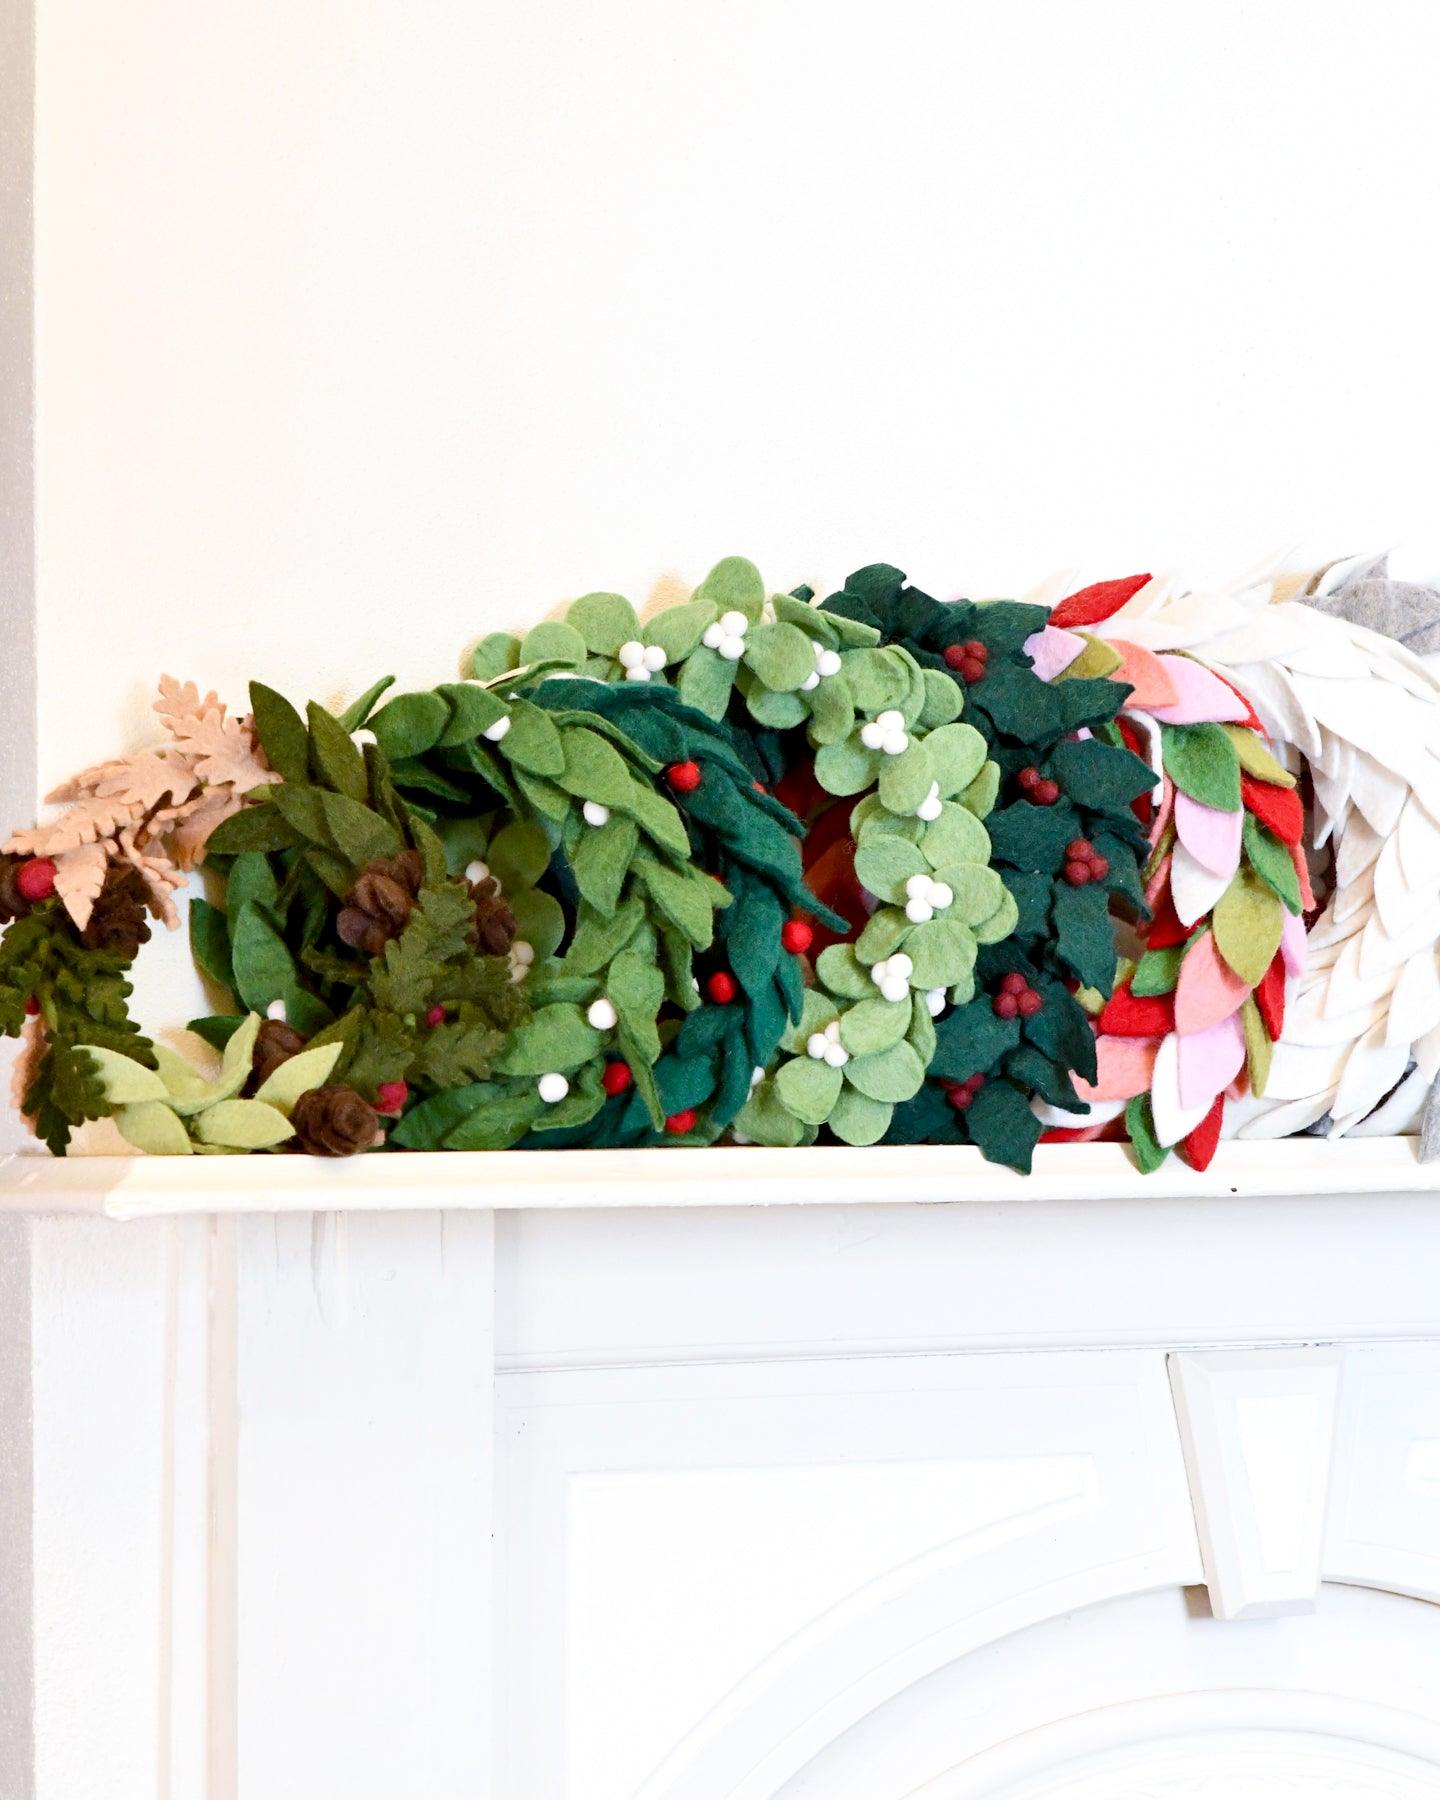 Felt Christmas Pine Cones and Holly Berries Wreath - Tara Treasures